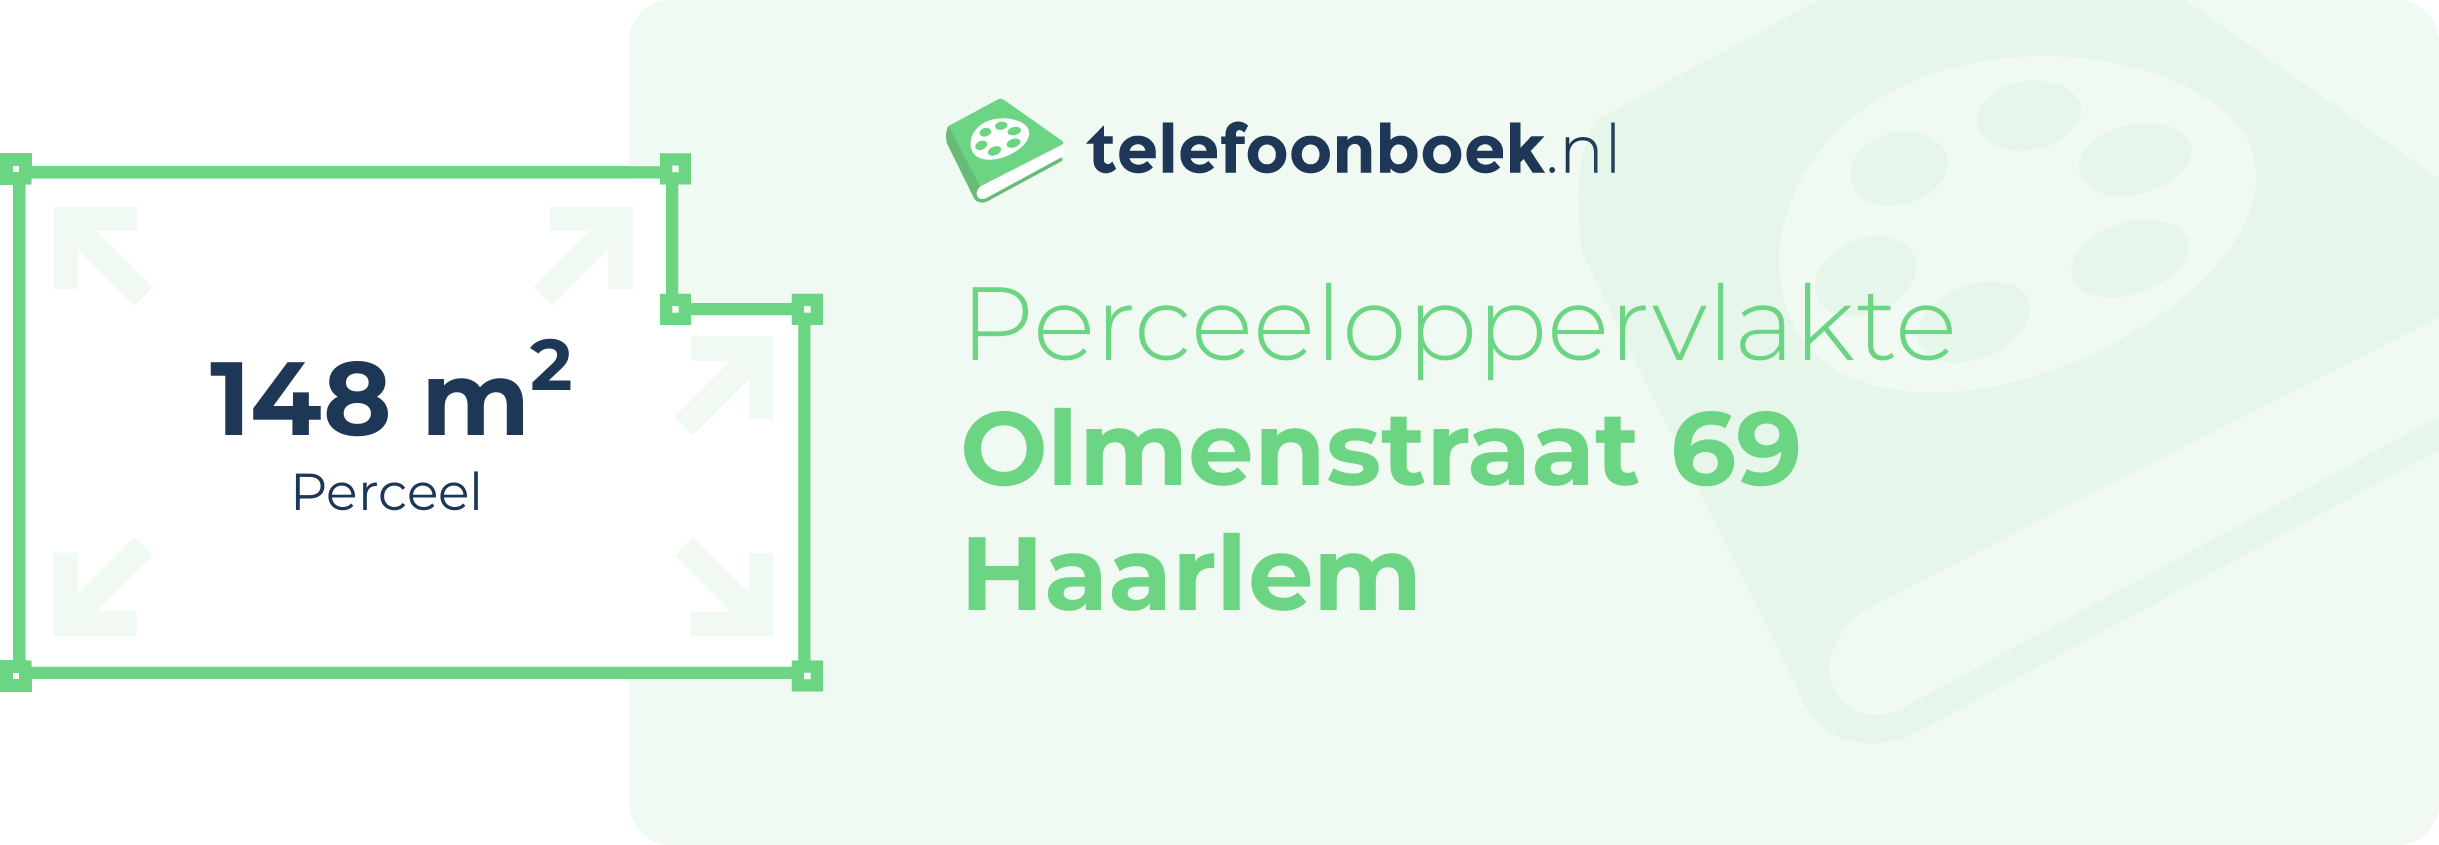 Perceeloppervlakte Olmenstraat 69 Haarlem